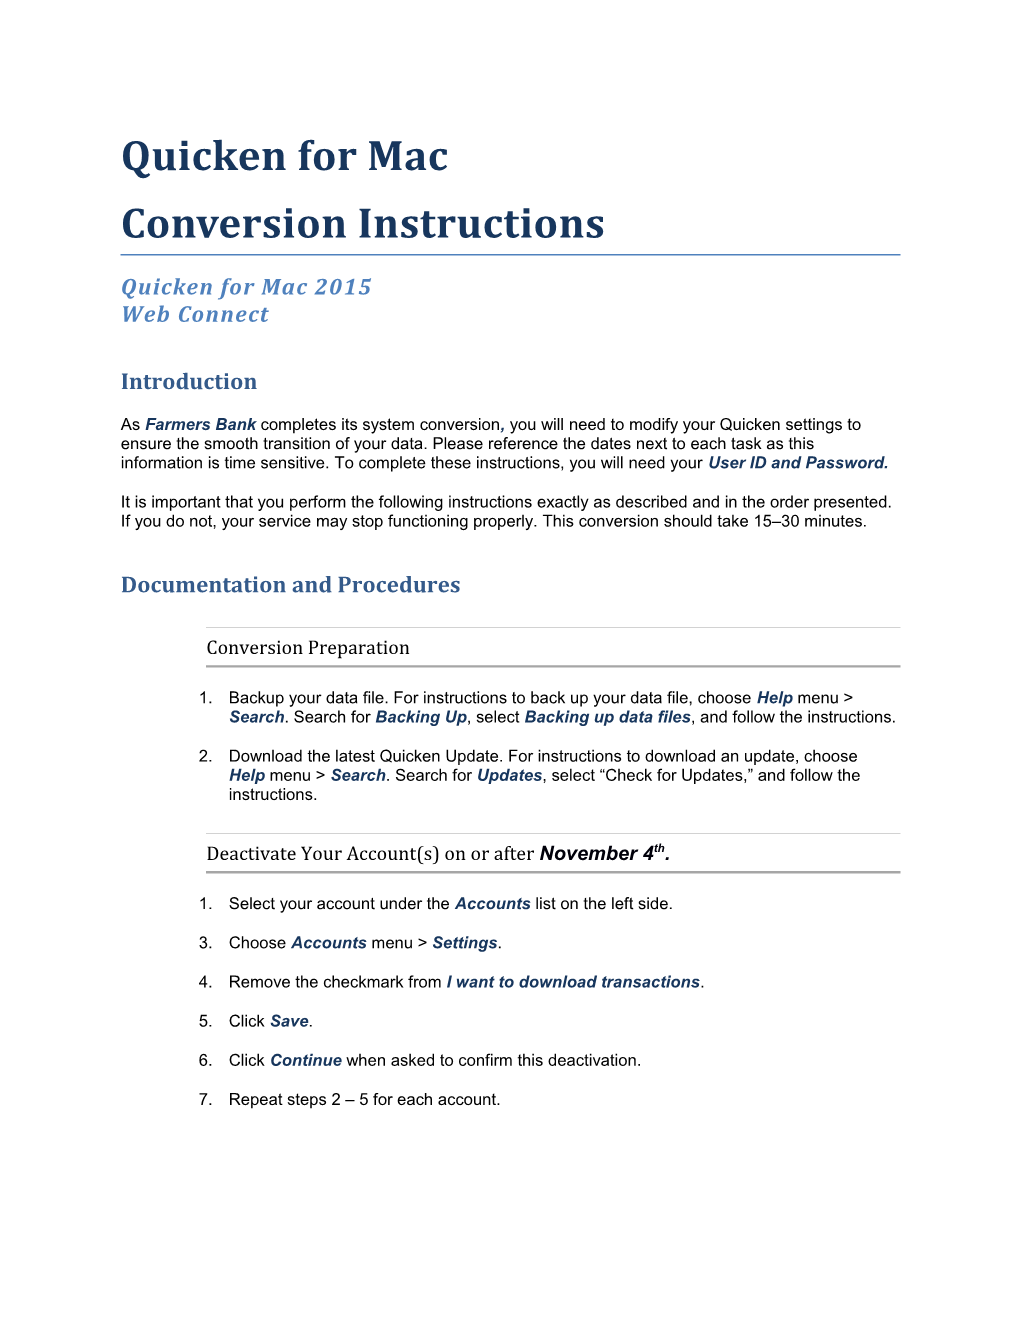 Conversion Instructions